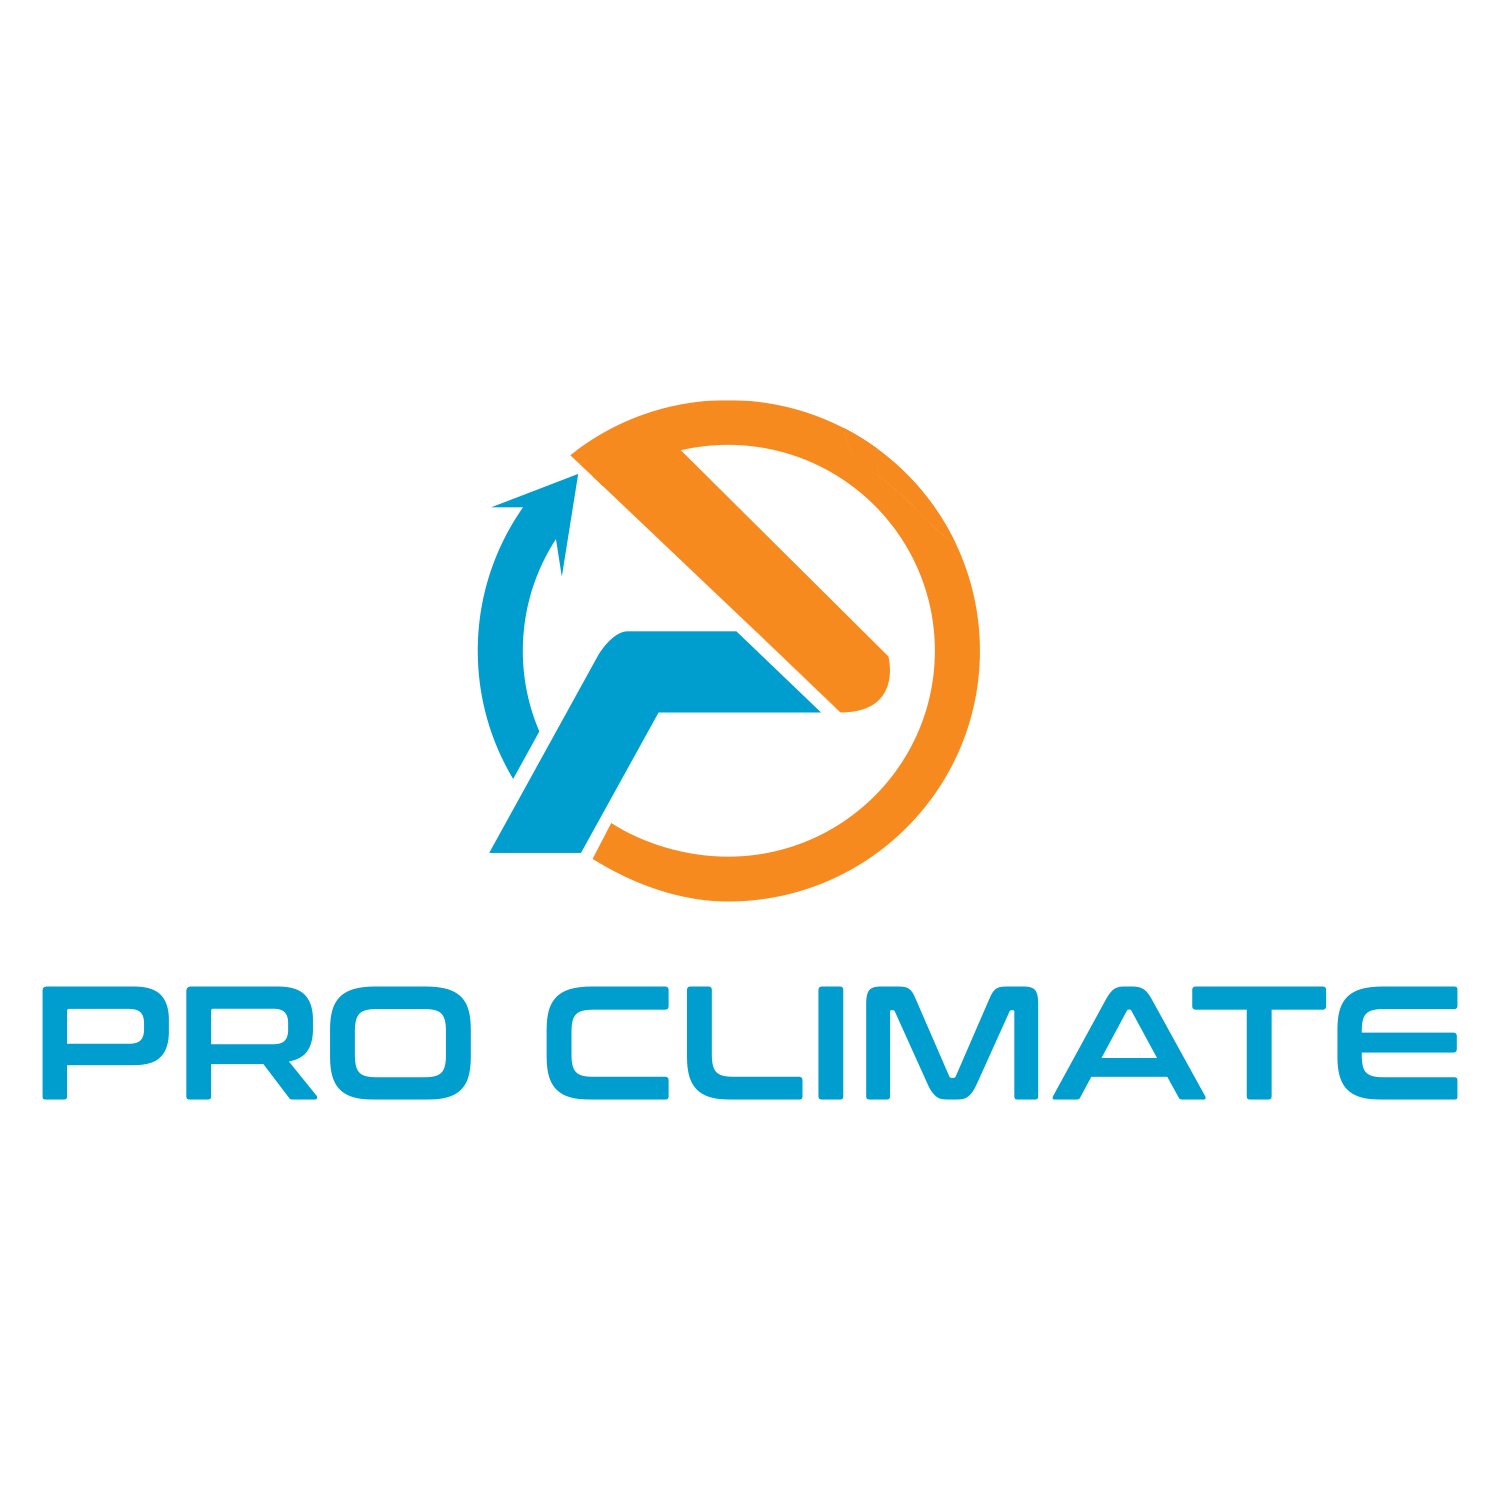 Pro Climate's logo